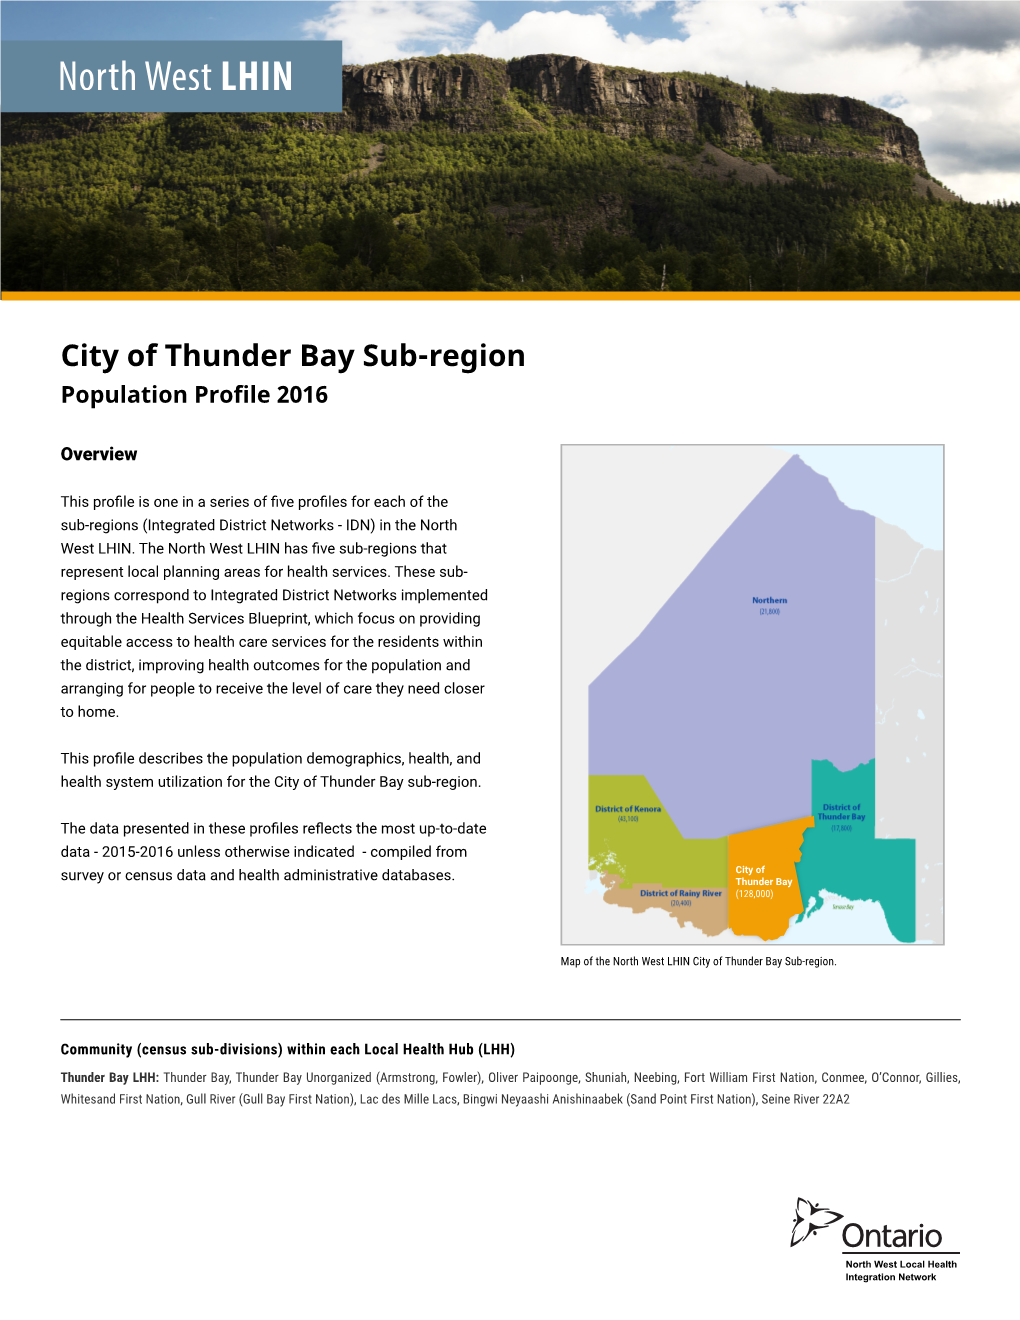 City of Thunder Bay Sub-Region Population Profile 2016